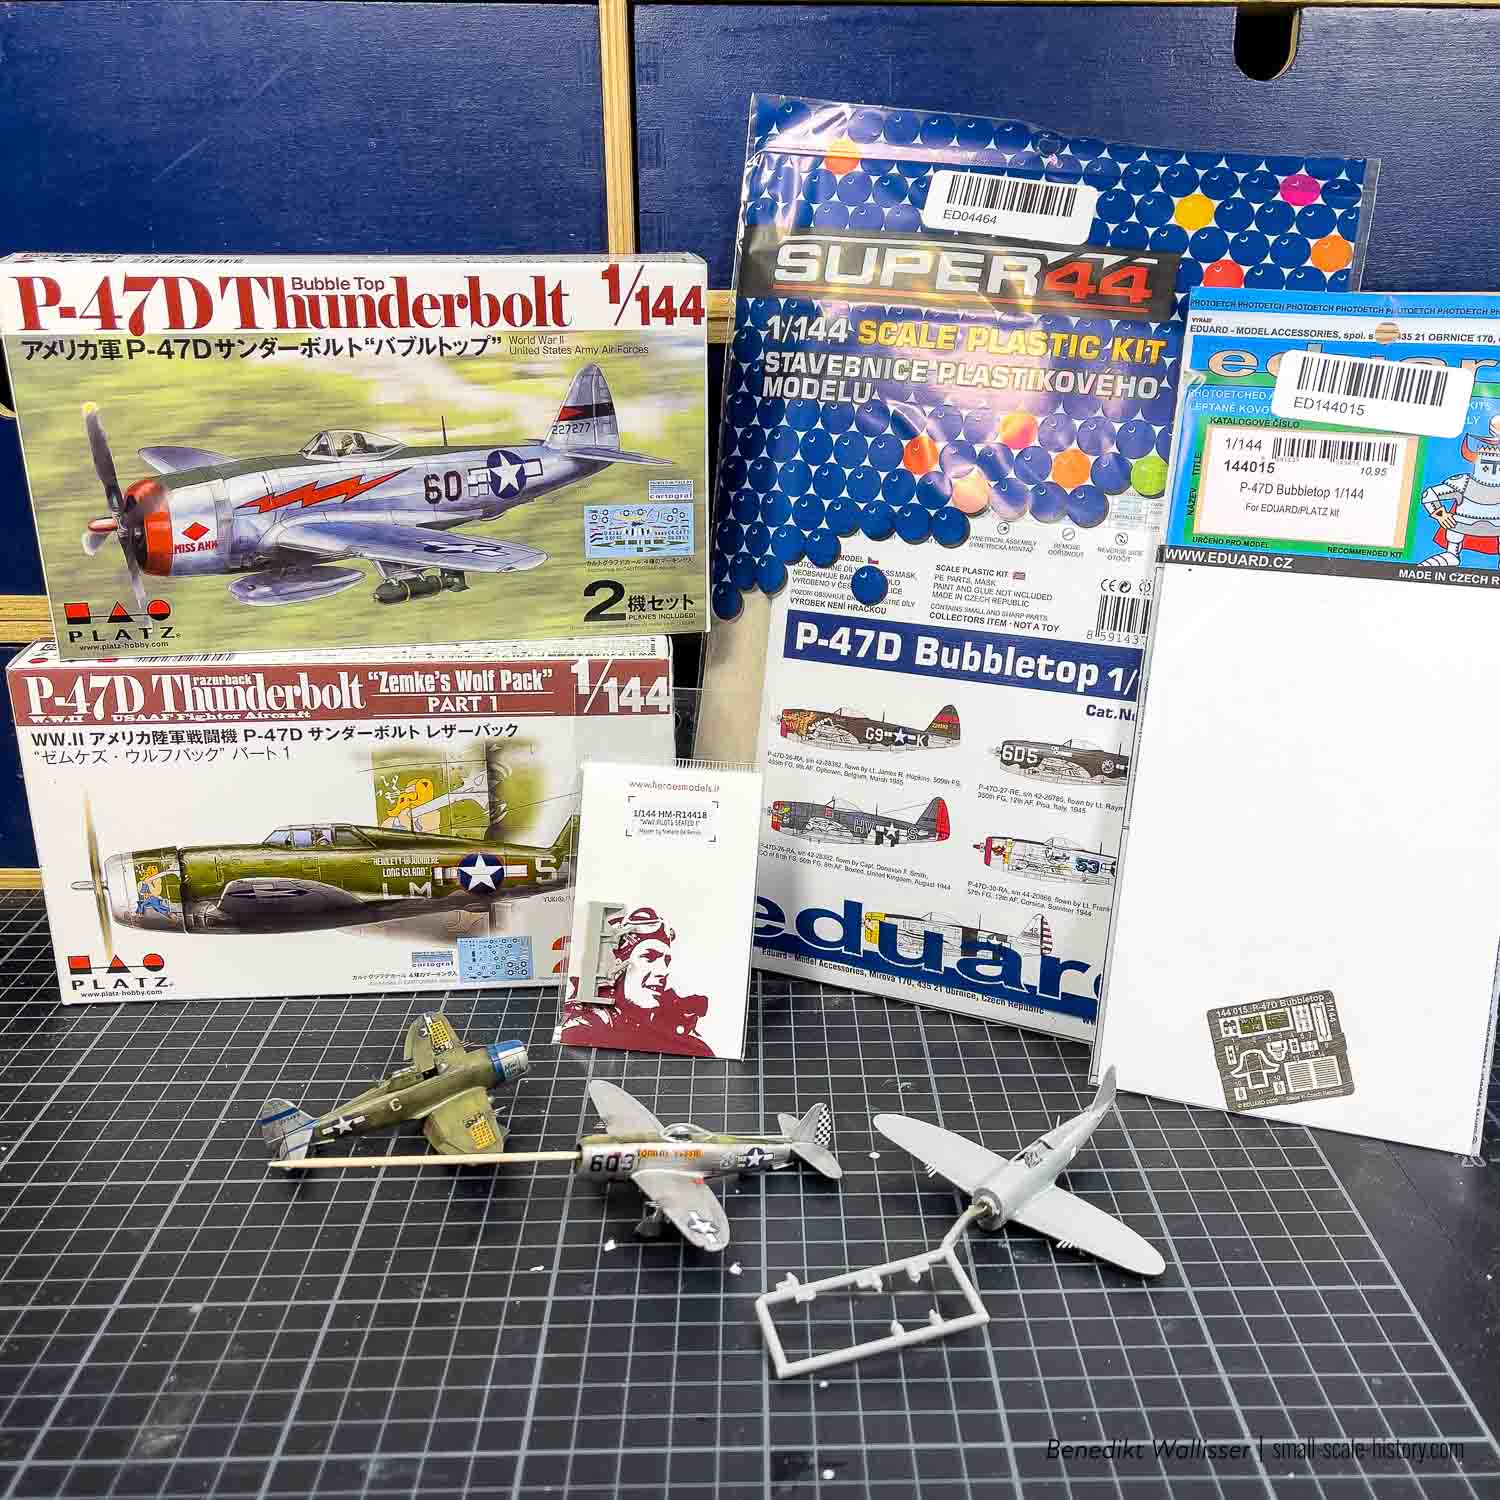 1/144 P-47D Thunderbolt kit (Platz / Eduard)